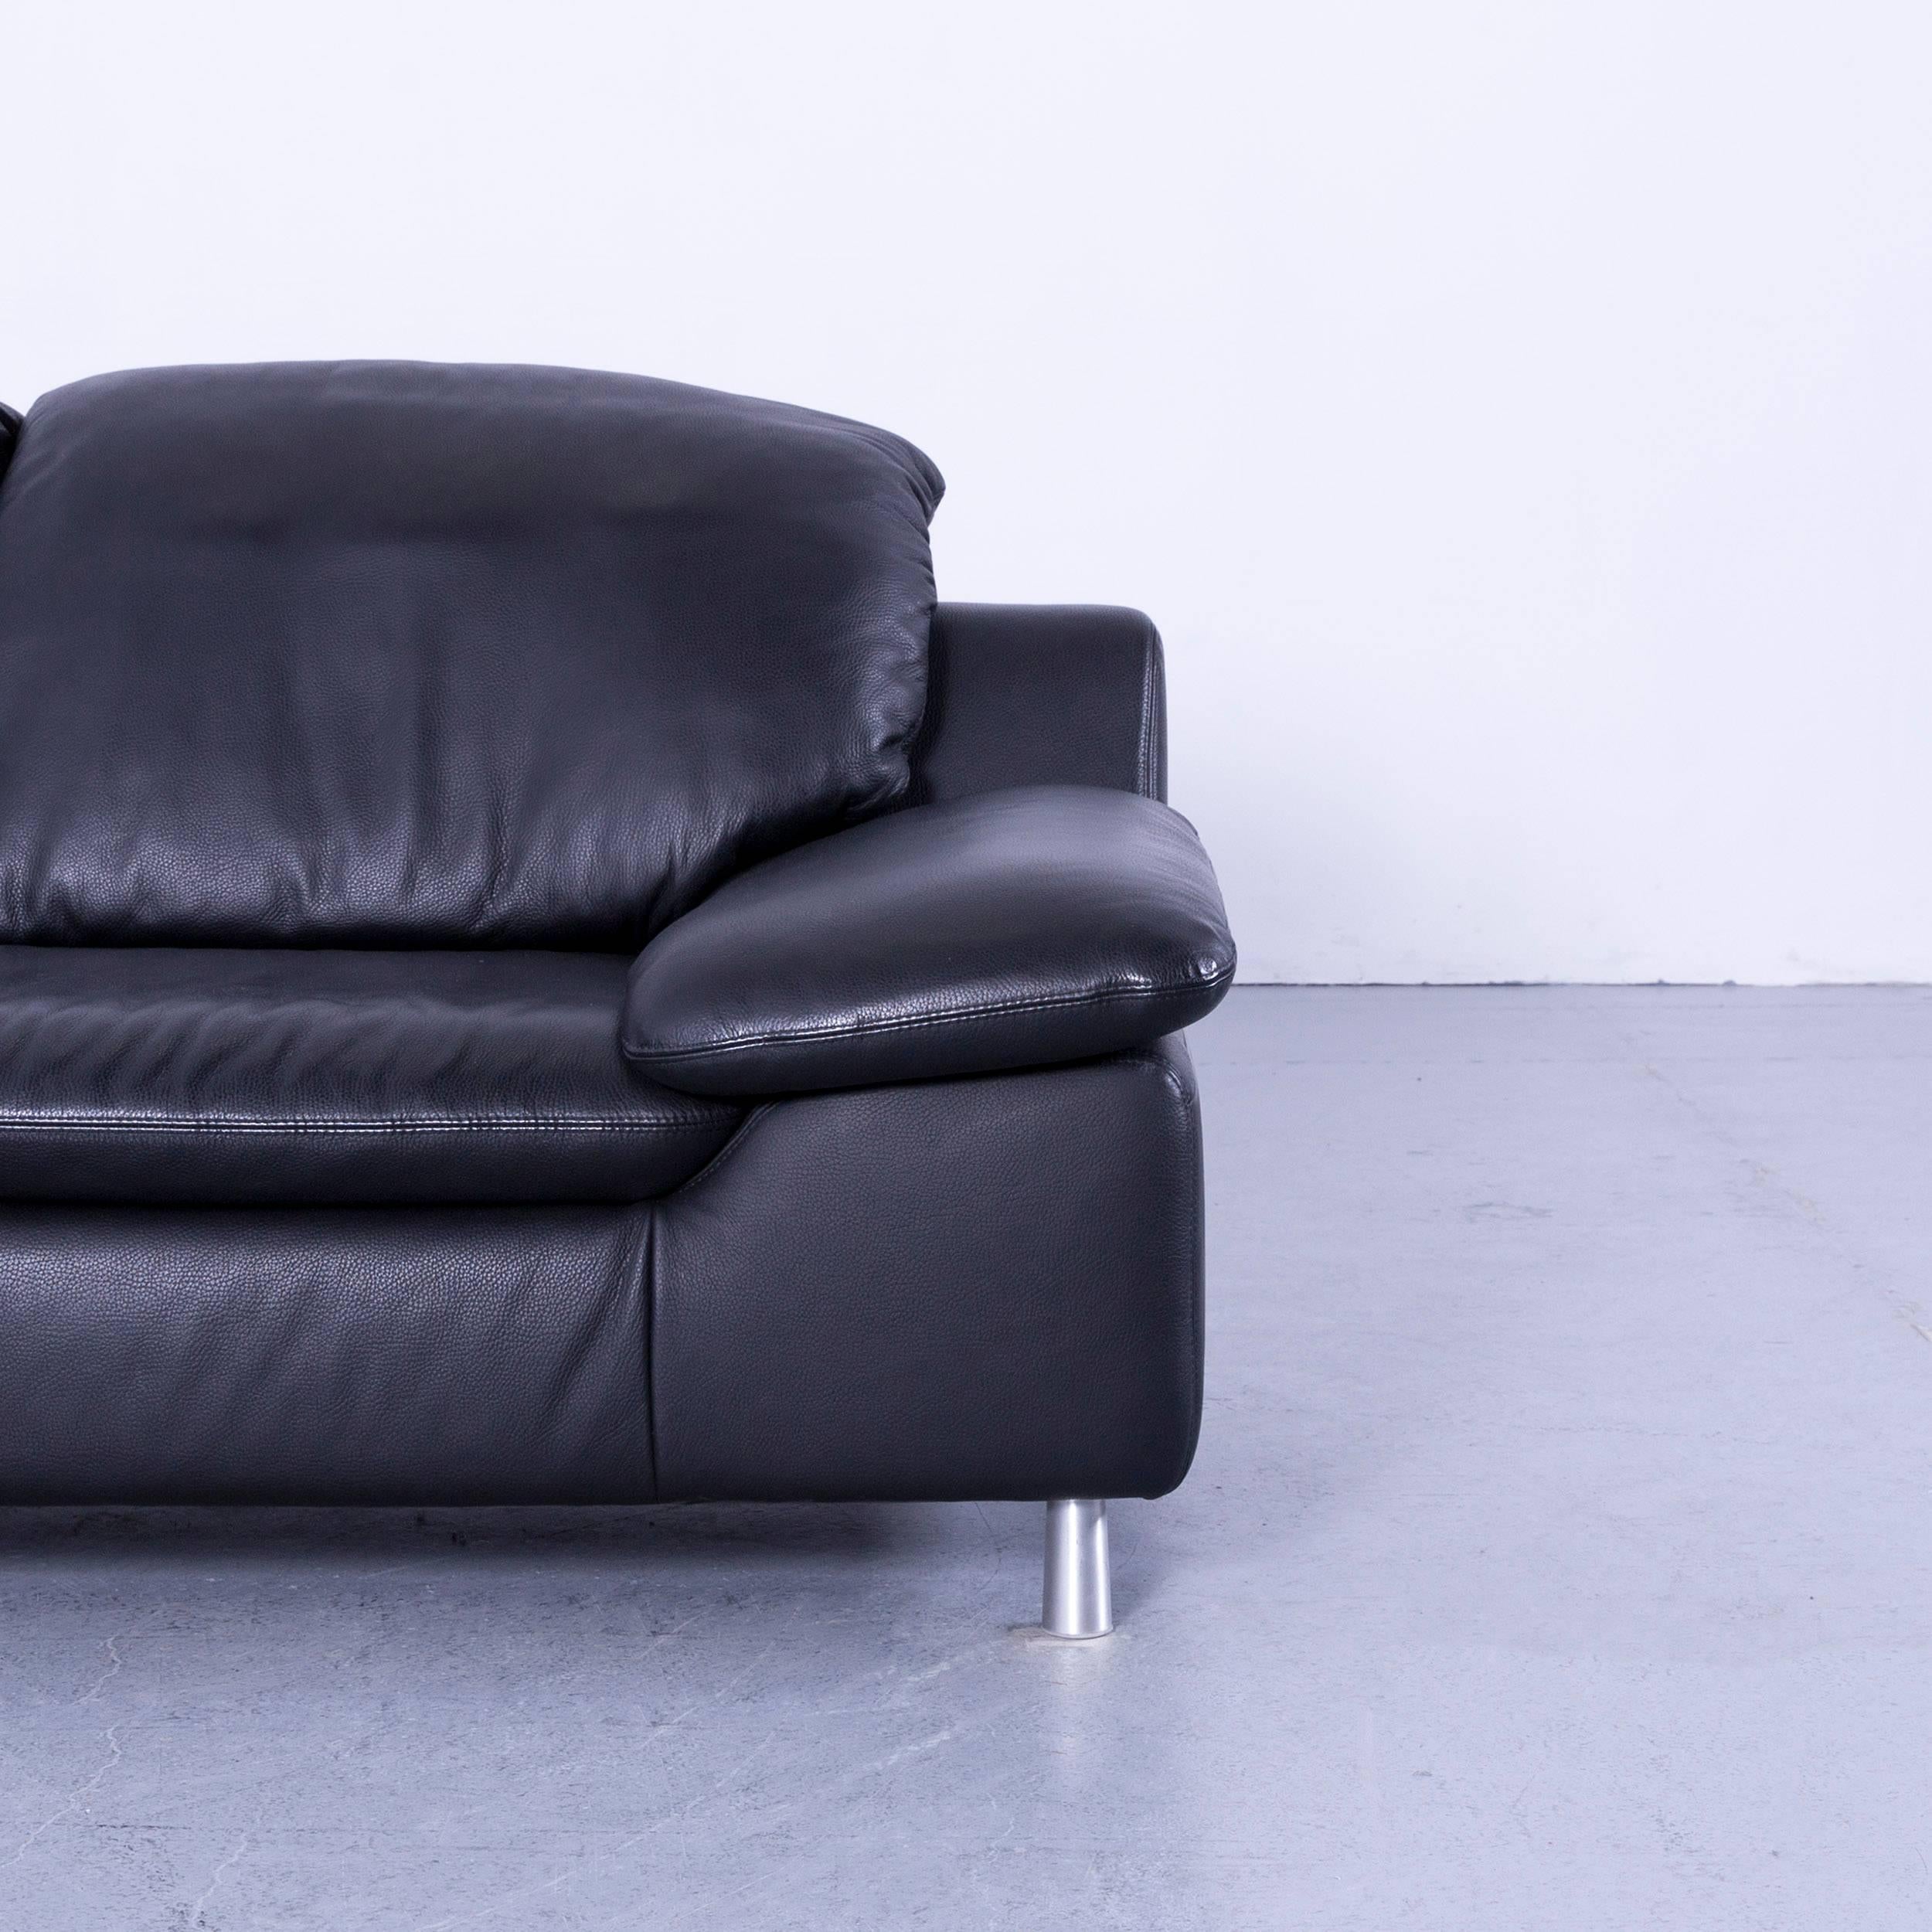 German Willi Schillig Designer Leather Corner Sofa Black Full Leather with Functions